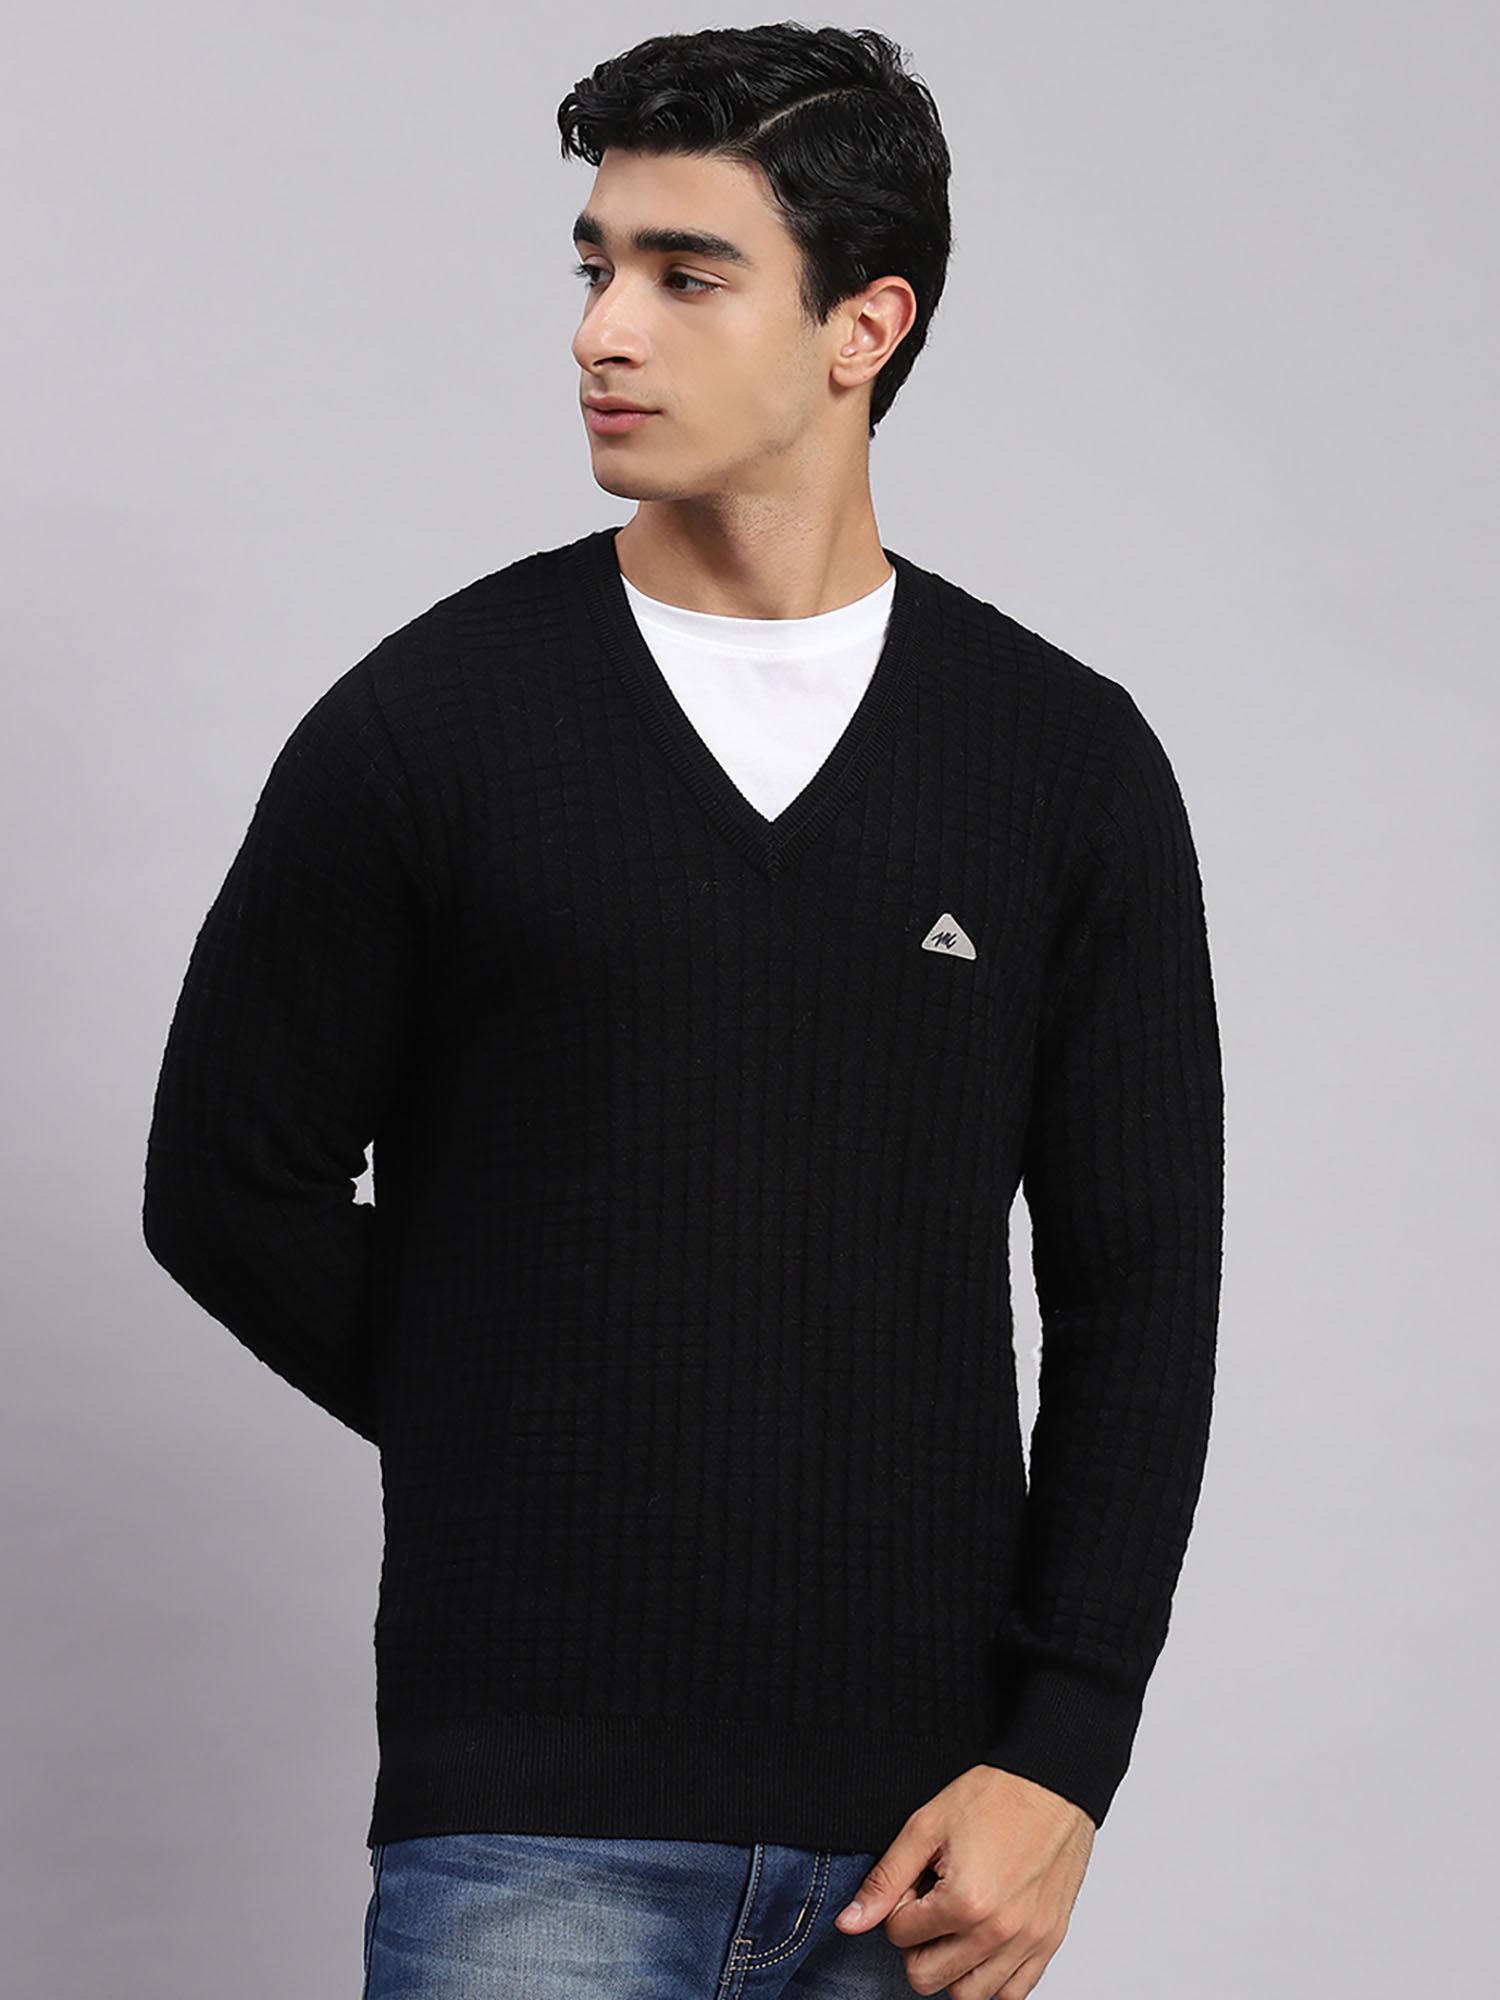 Black Self Design V Neck Sweater